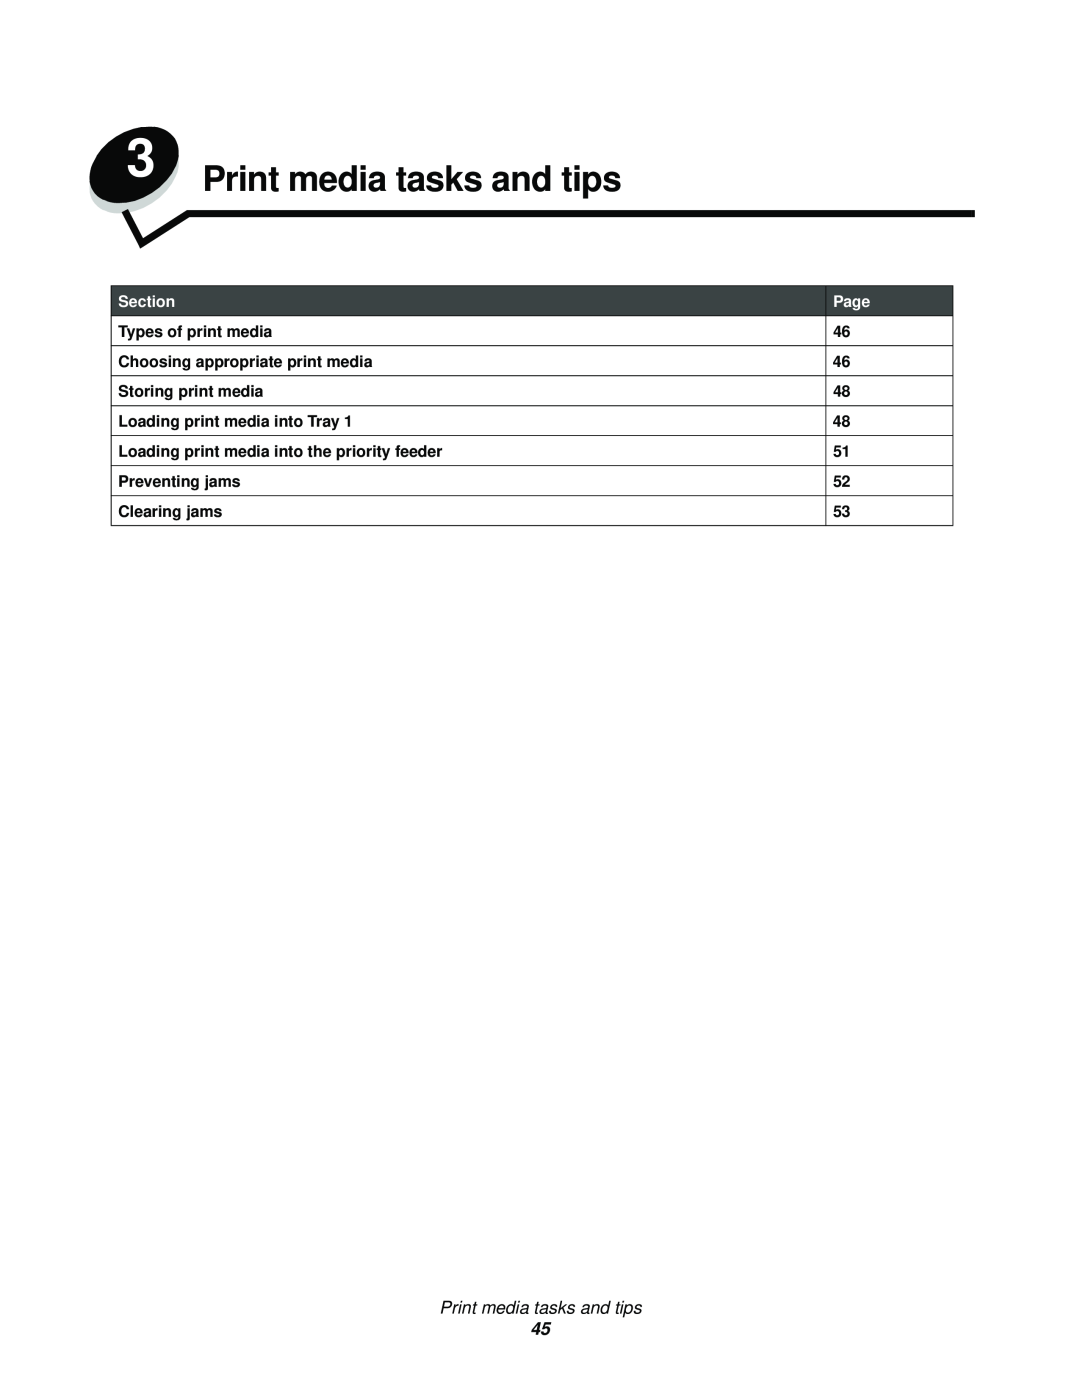 Lexmark 120 Print media tasks and tips, Types of print media, Choosing appropriate print media, Storing print media, Page 